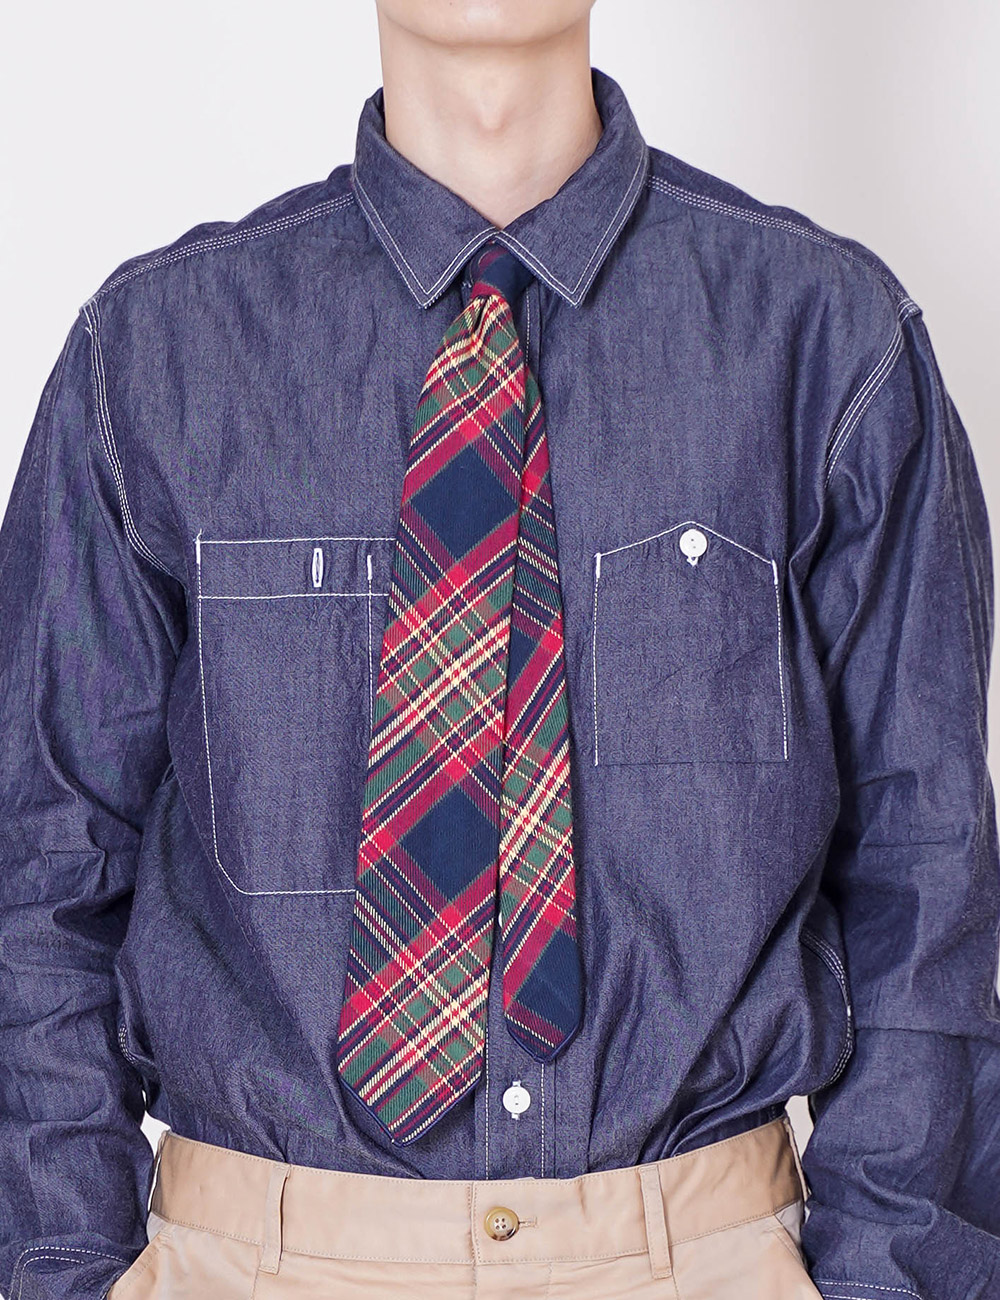 Engineered Garments : Neck Tie (Navy/Green/Red Cotton Twill Plaid)